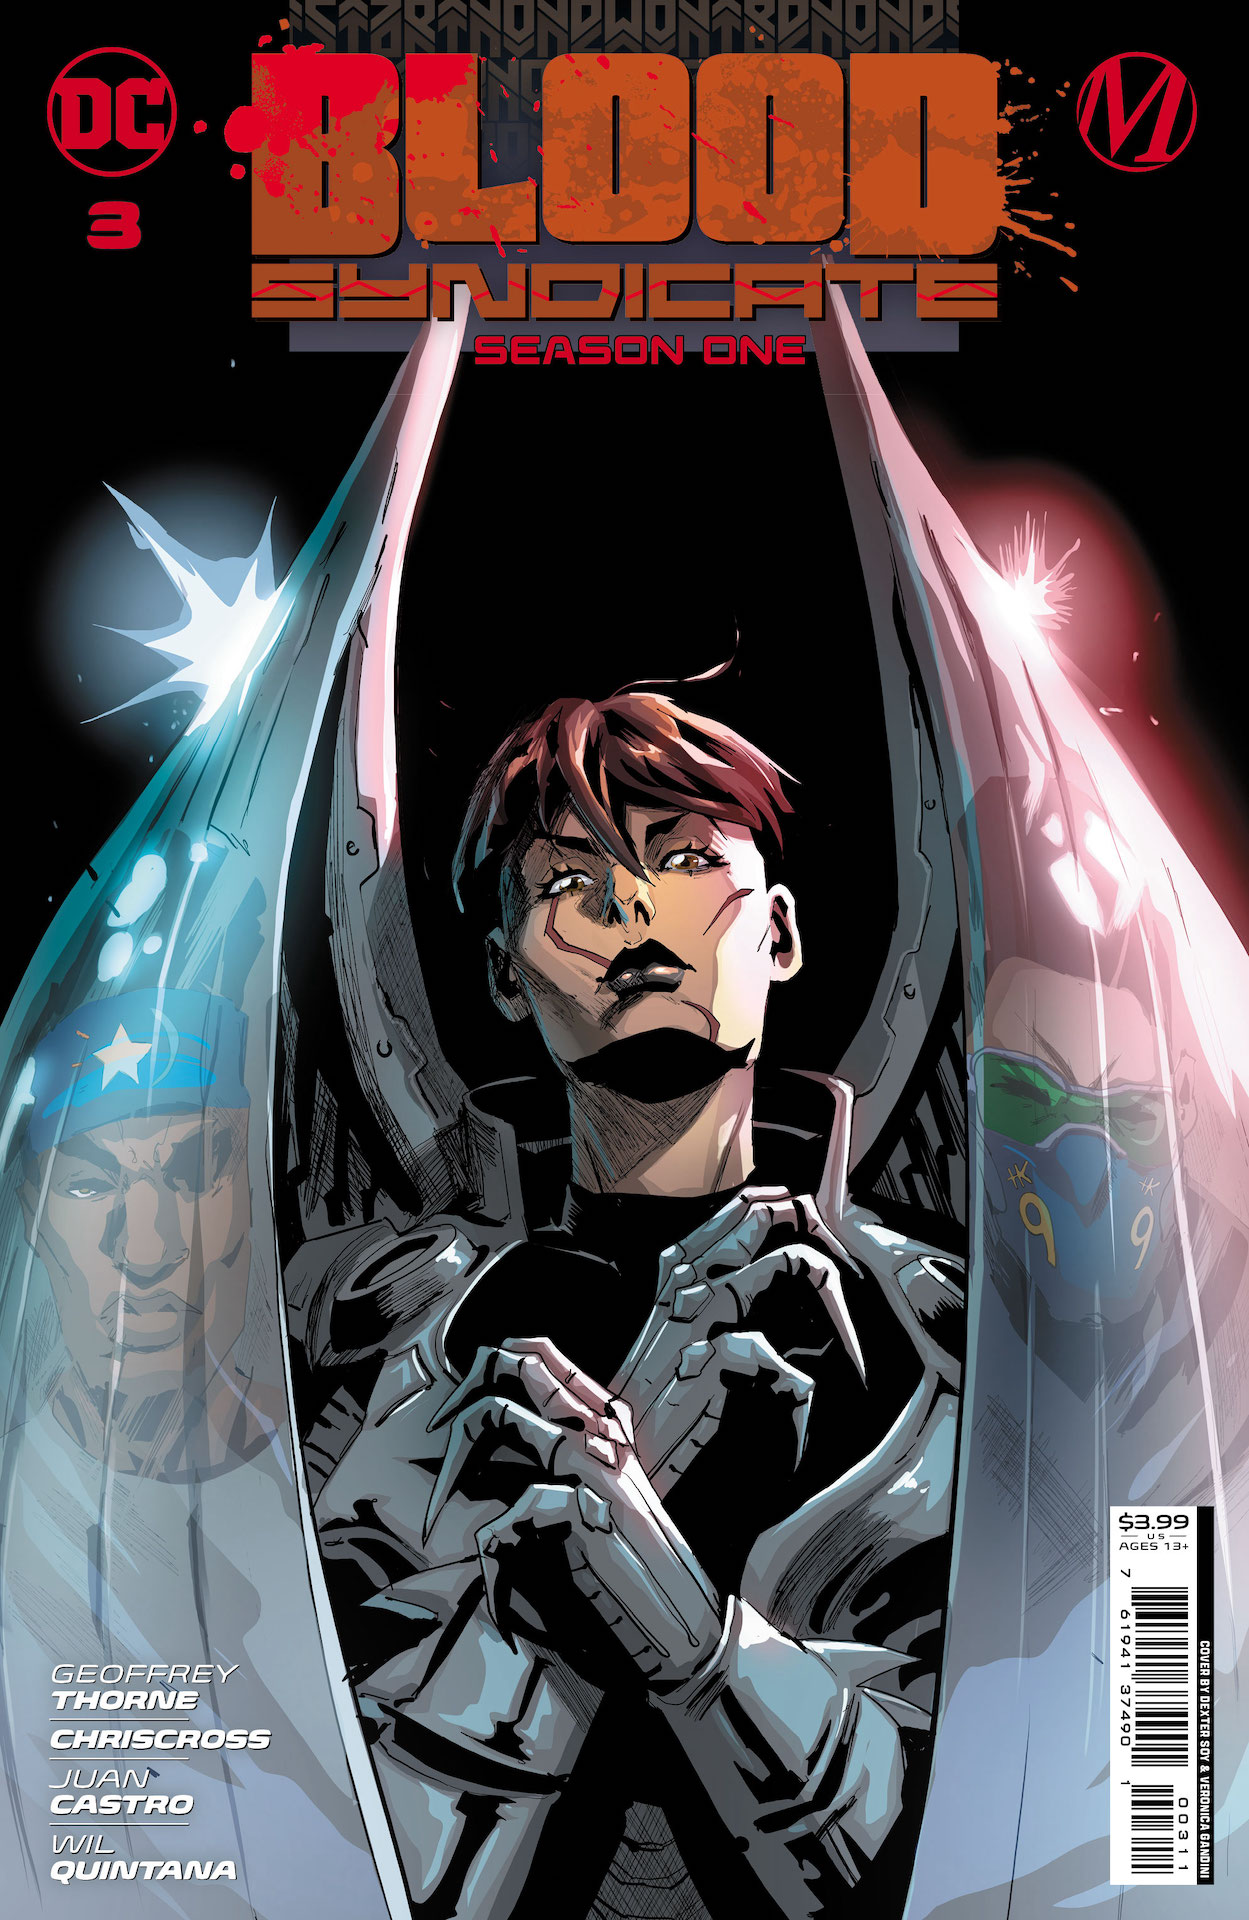 DC Preview: Blood Syndicate: Season One #3